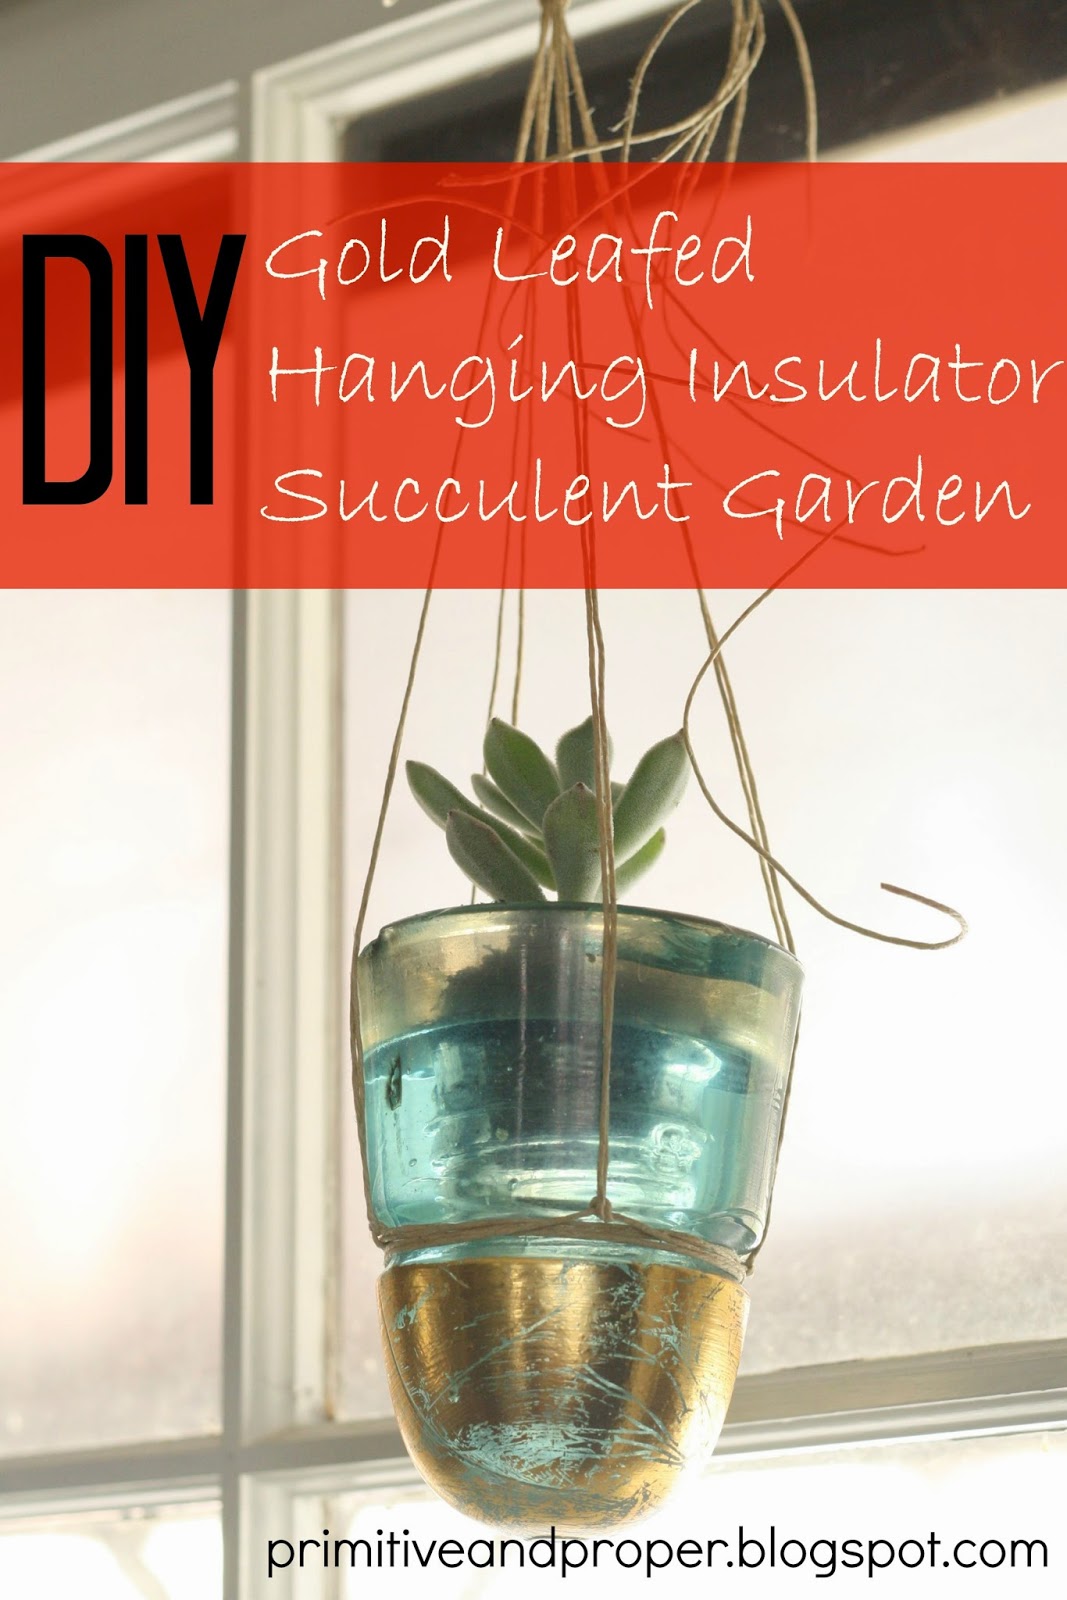 DIY Gold Leafed Hanging Insulator Succulent Garden